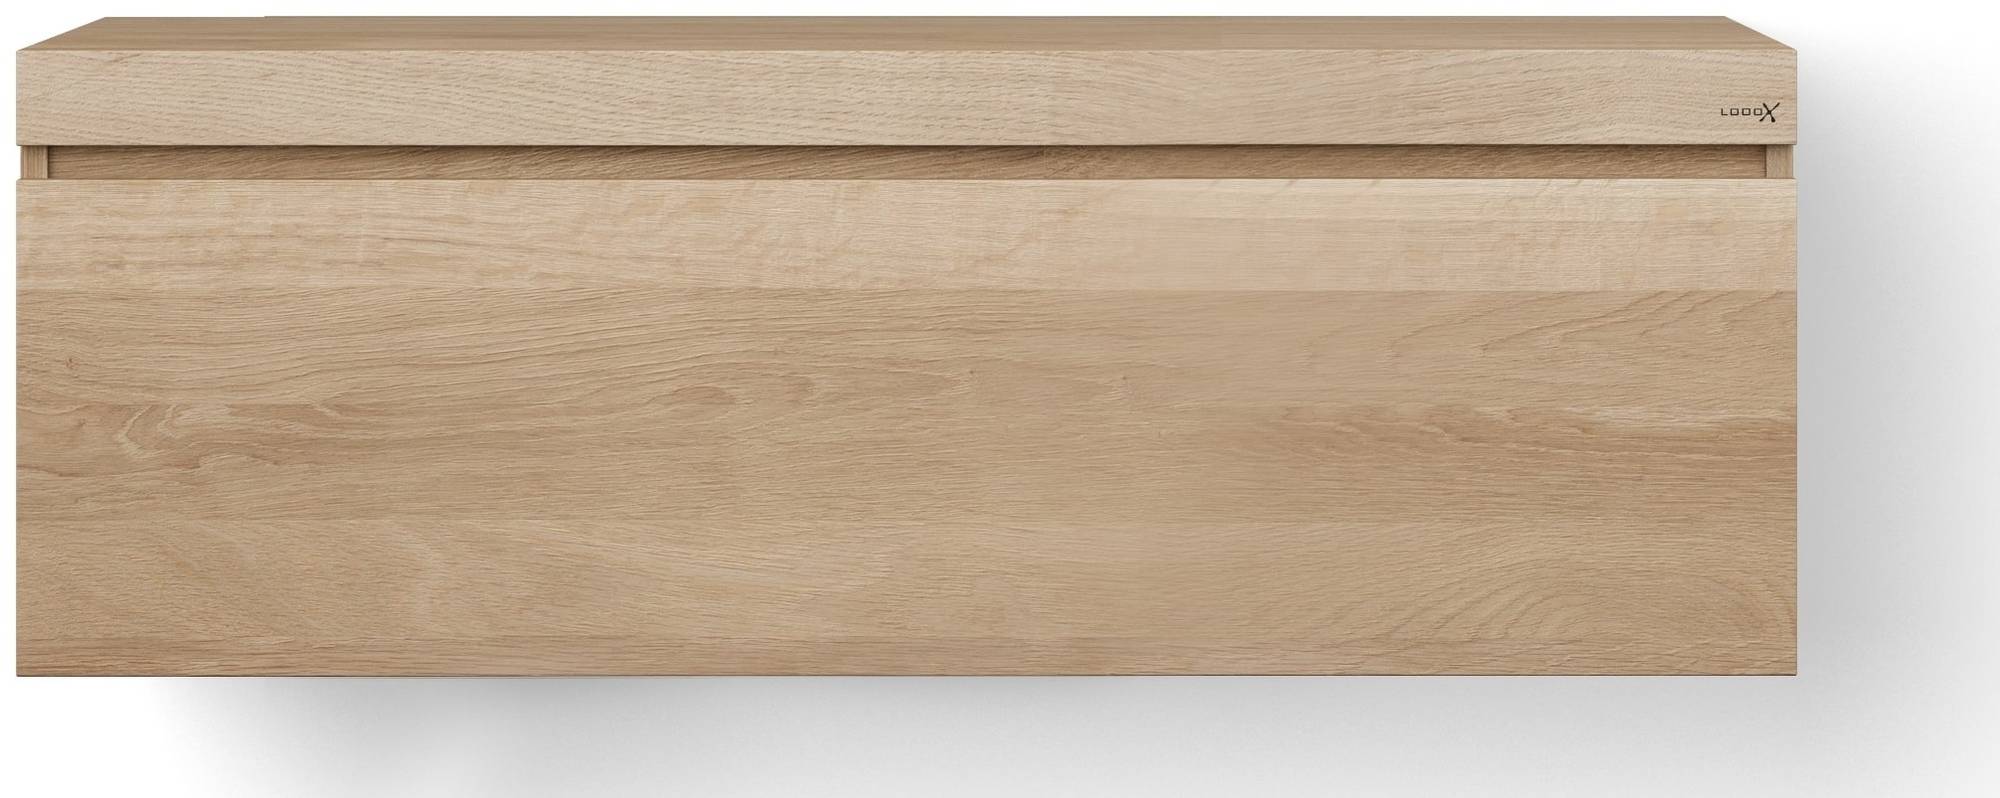 Looox Wood Wooden Drawer Box 120x46x45 cm Old Grey